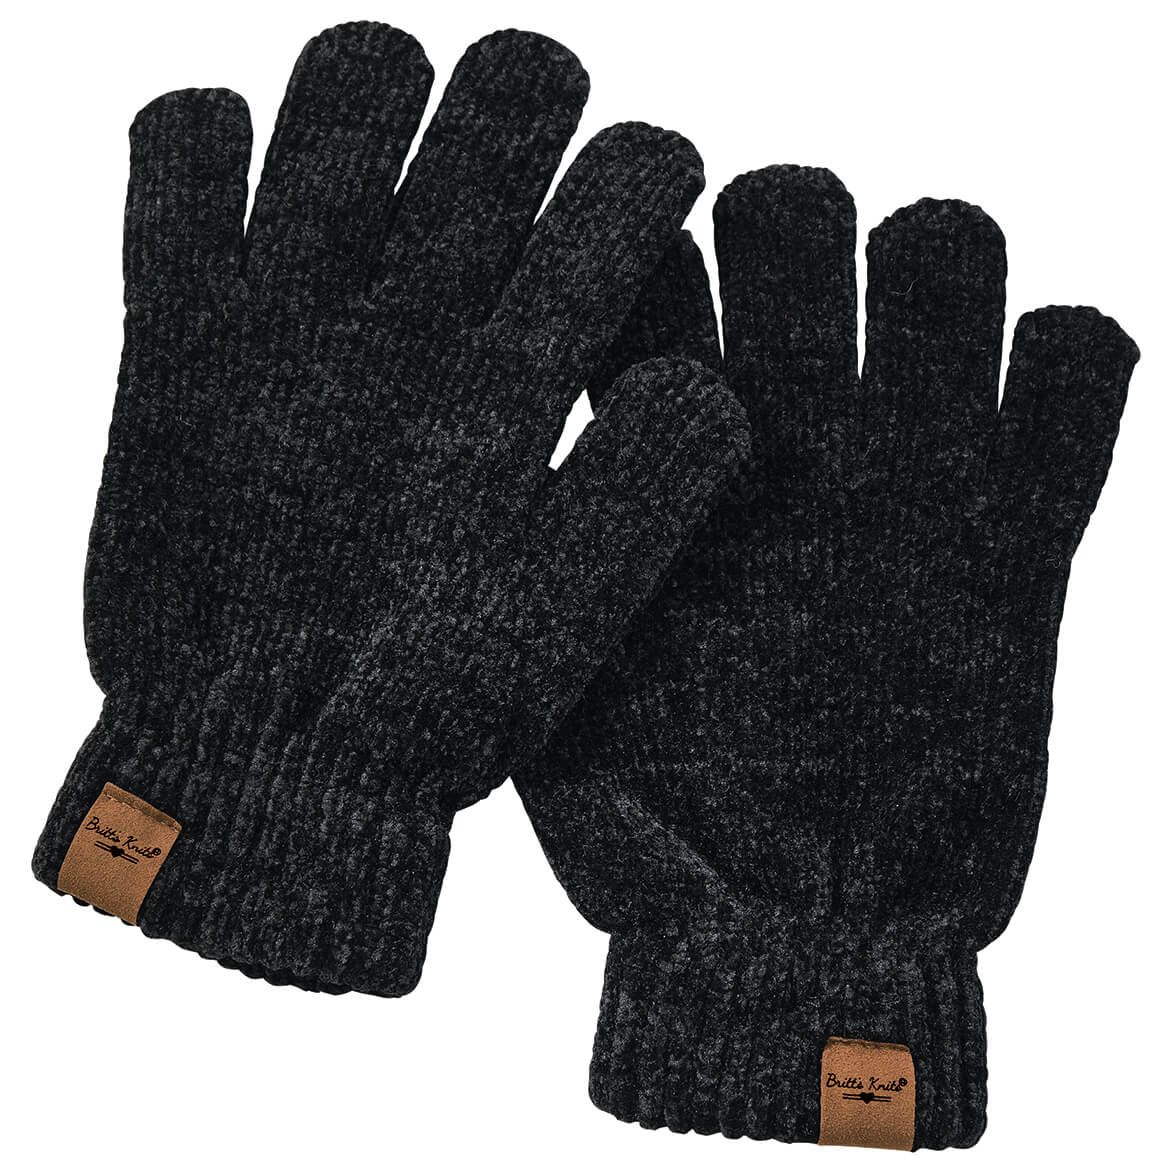 Britt's Knits® Soft Chenille Gloves + '-' + 372347